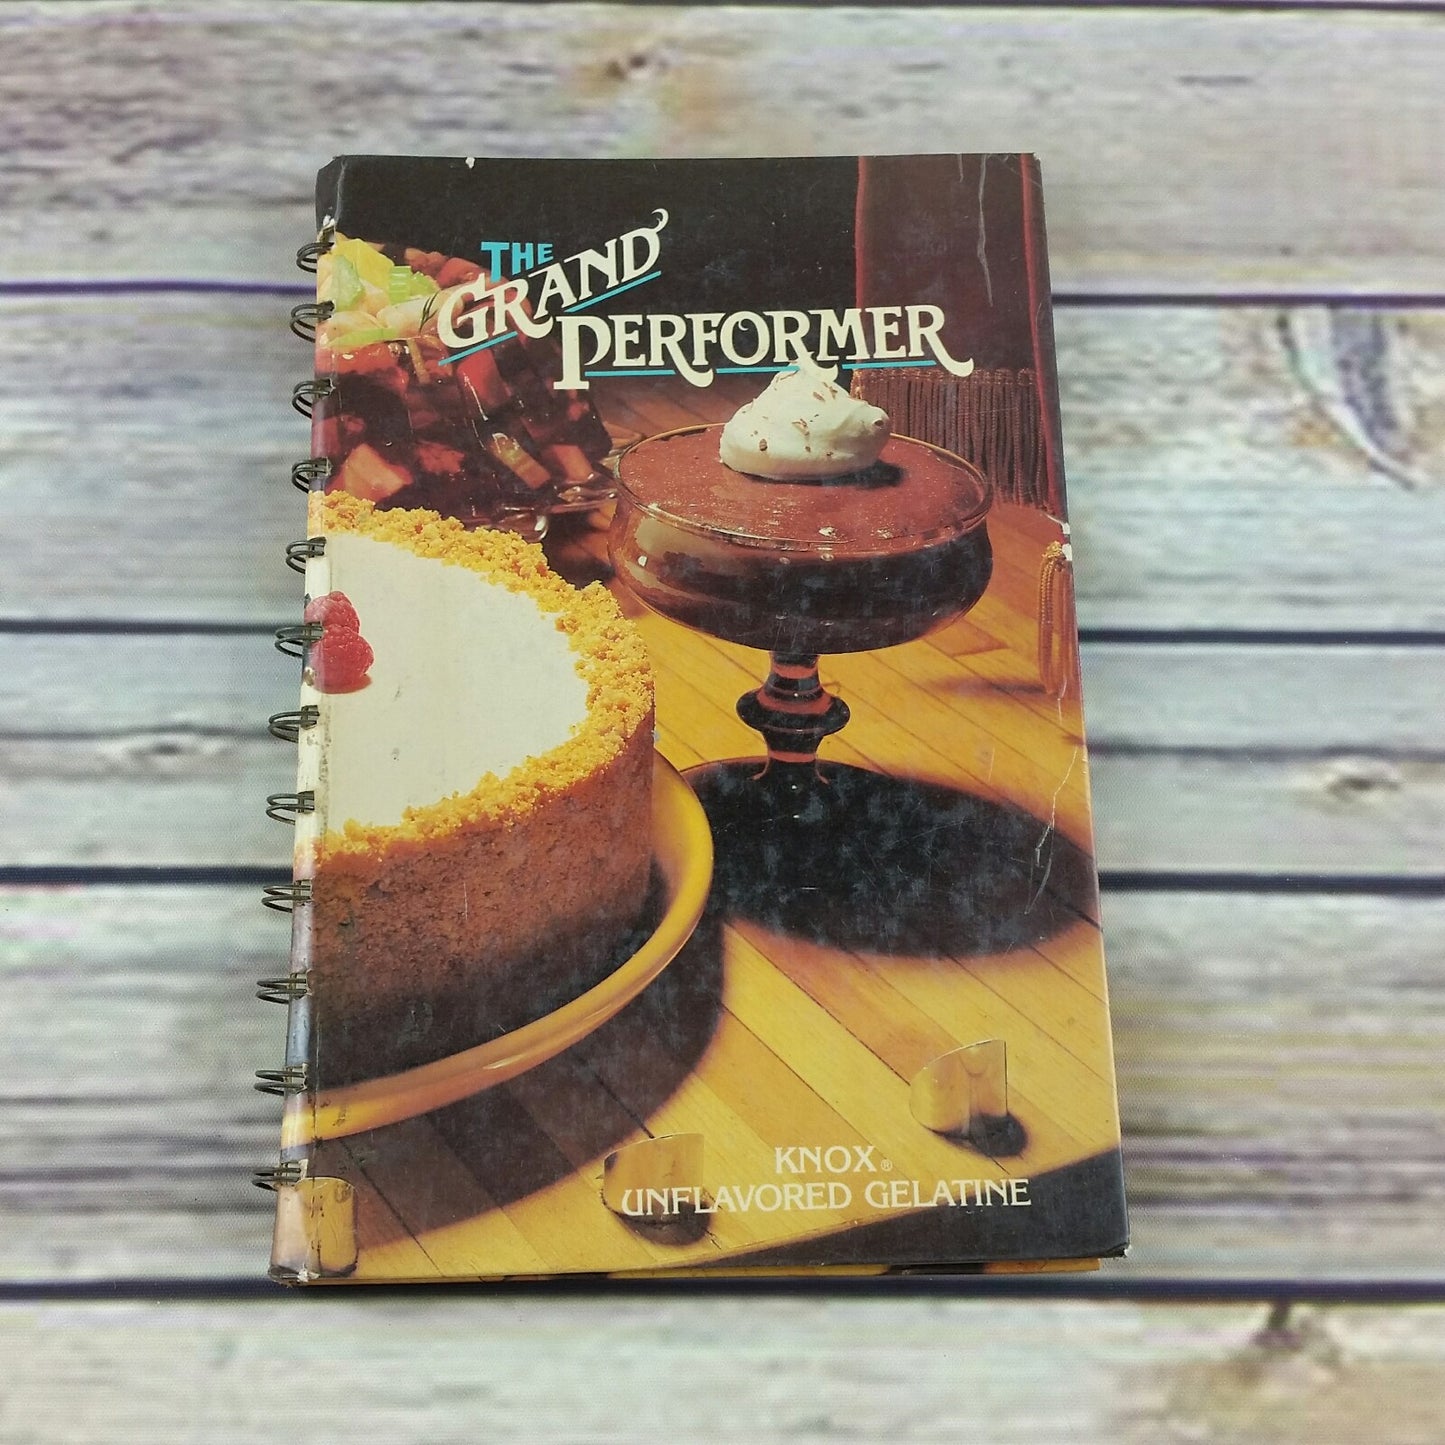 Vintage Cookbook The Grand Performer Knox Gelatine Promo Recipes 1970s Spiral Bound Hardcover - At Grandma's Table